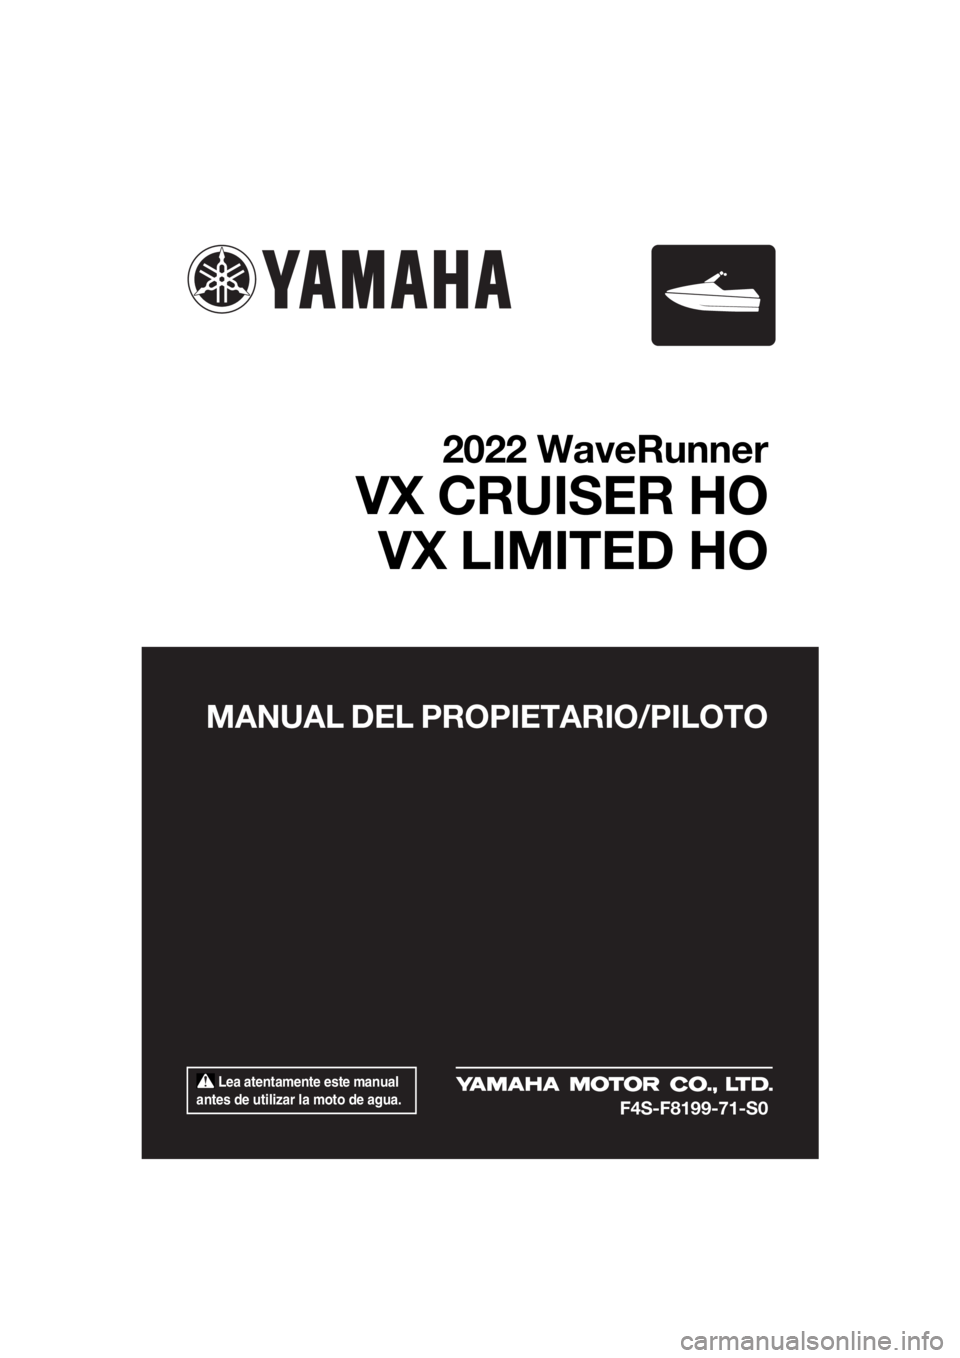 YAMAHA VX LIMITED HO 2022  Manuale de Empleo (in Spanish) 